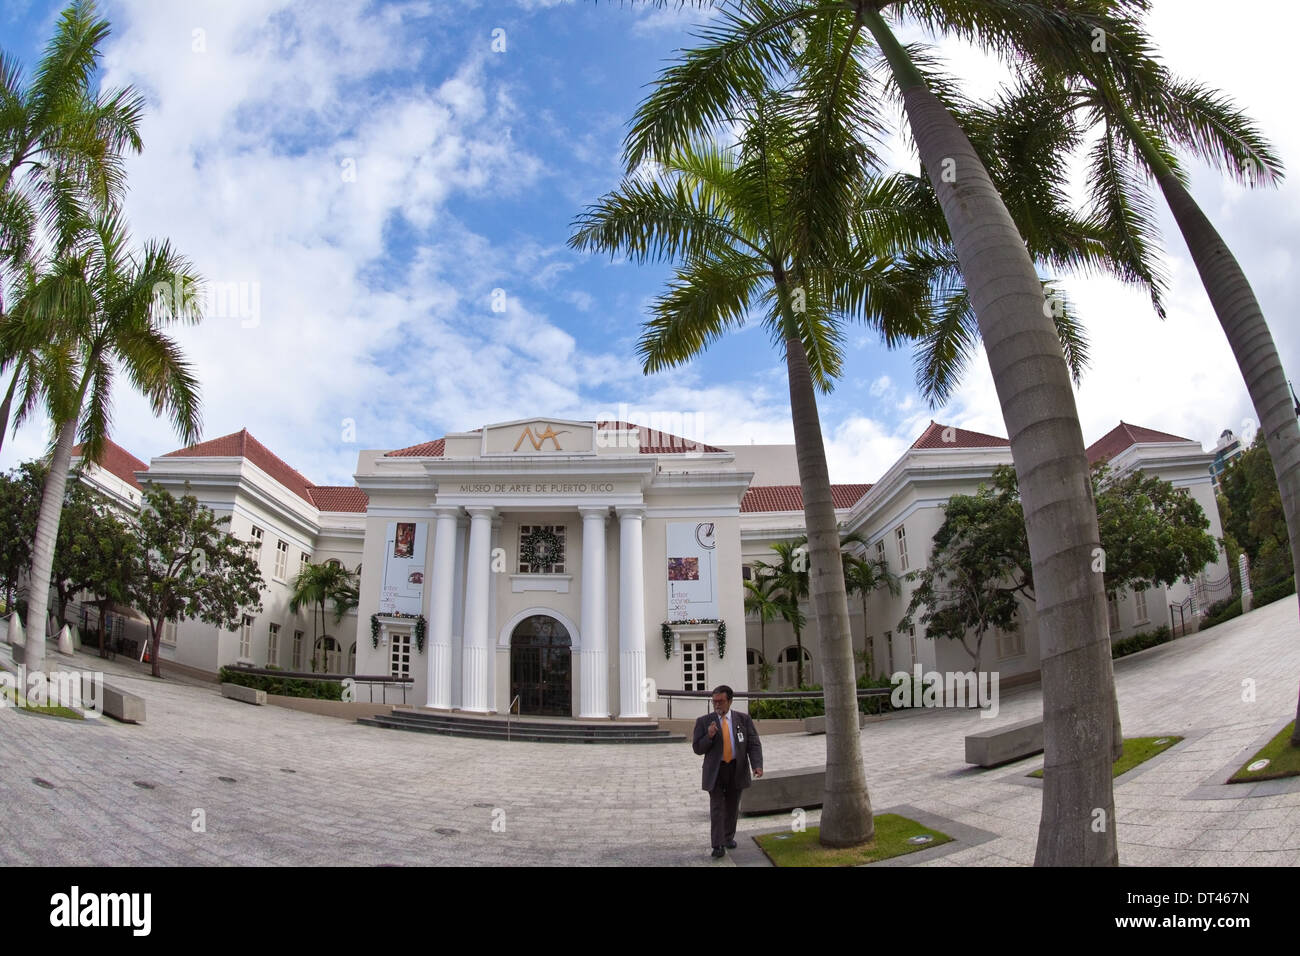 Art Museum (Museo de Arte) in San Juan, Puerto Rico Stock Photo